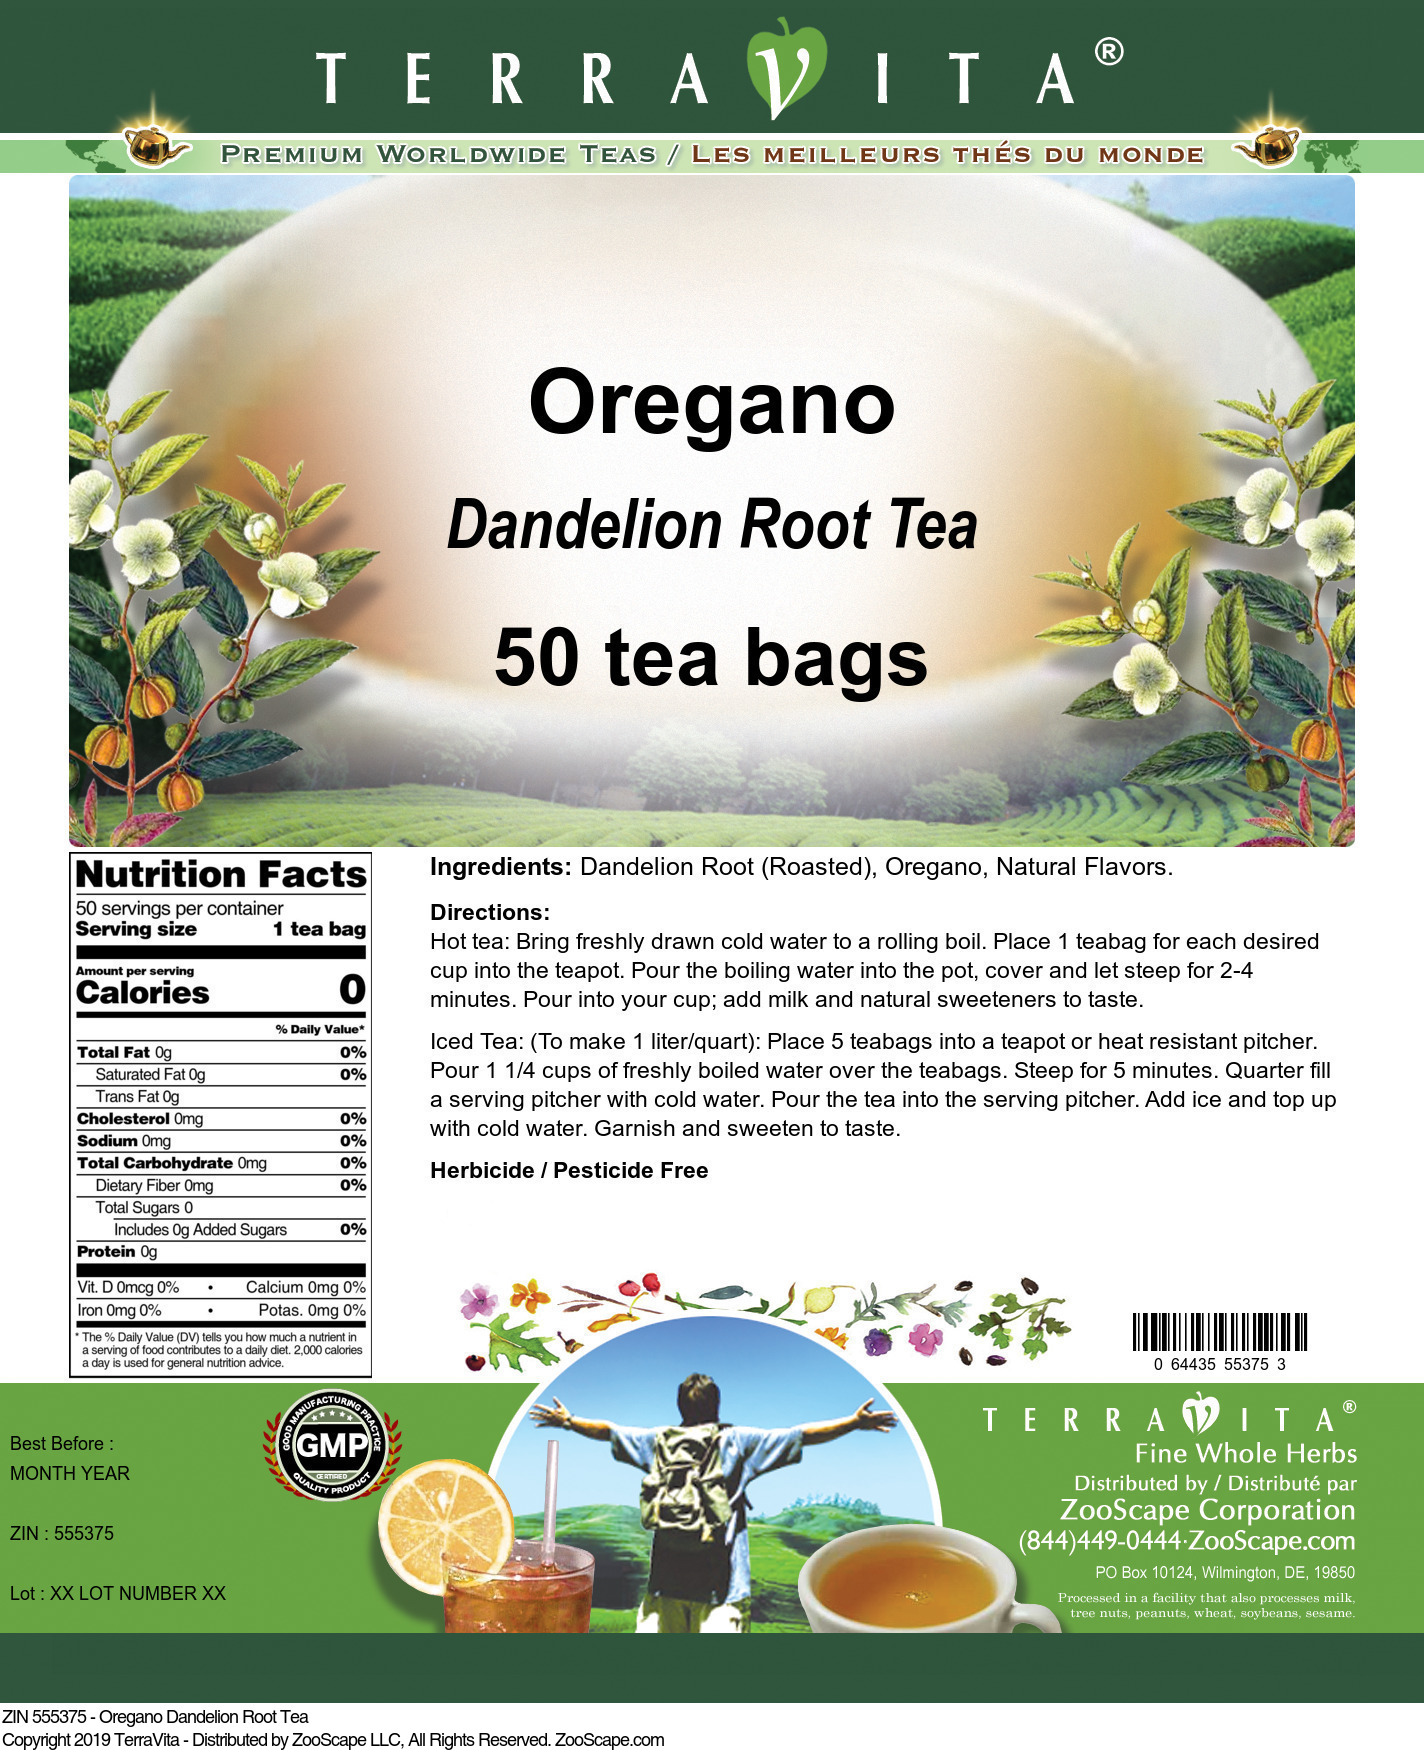 Oregano Dandelion Root Tea - Label